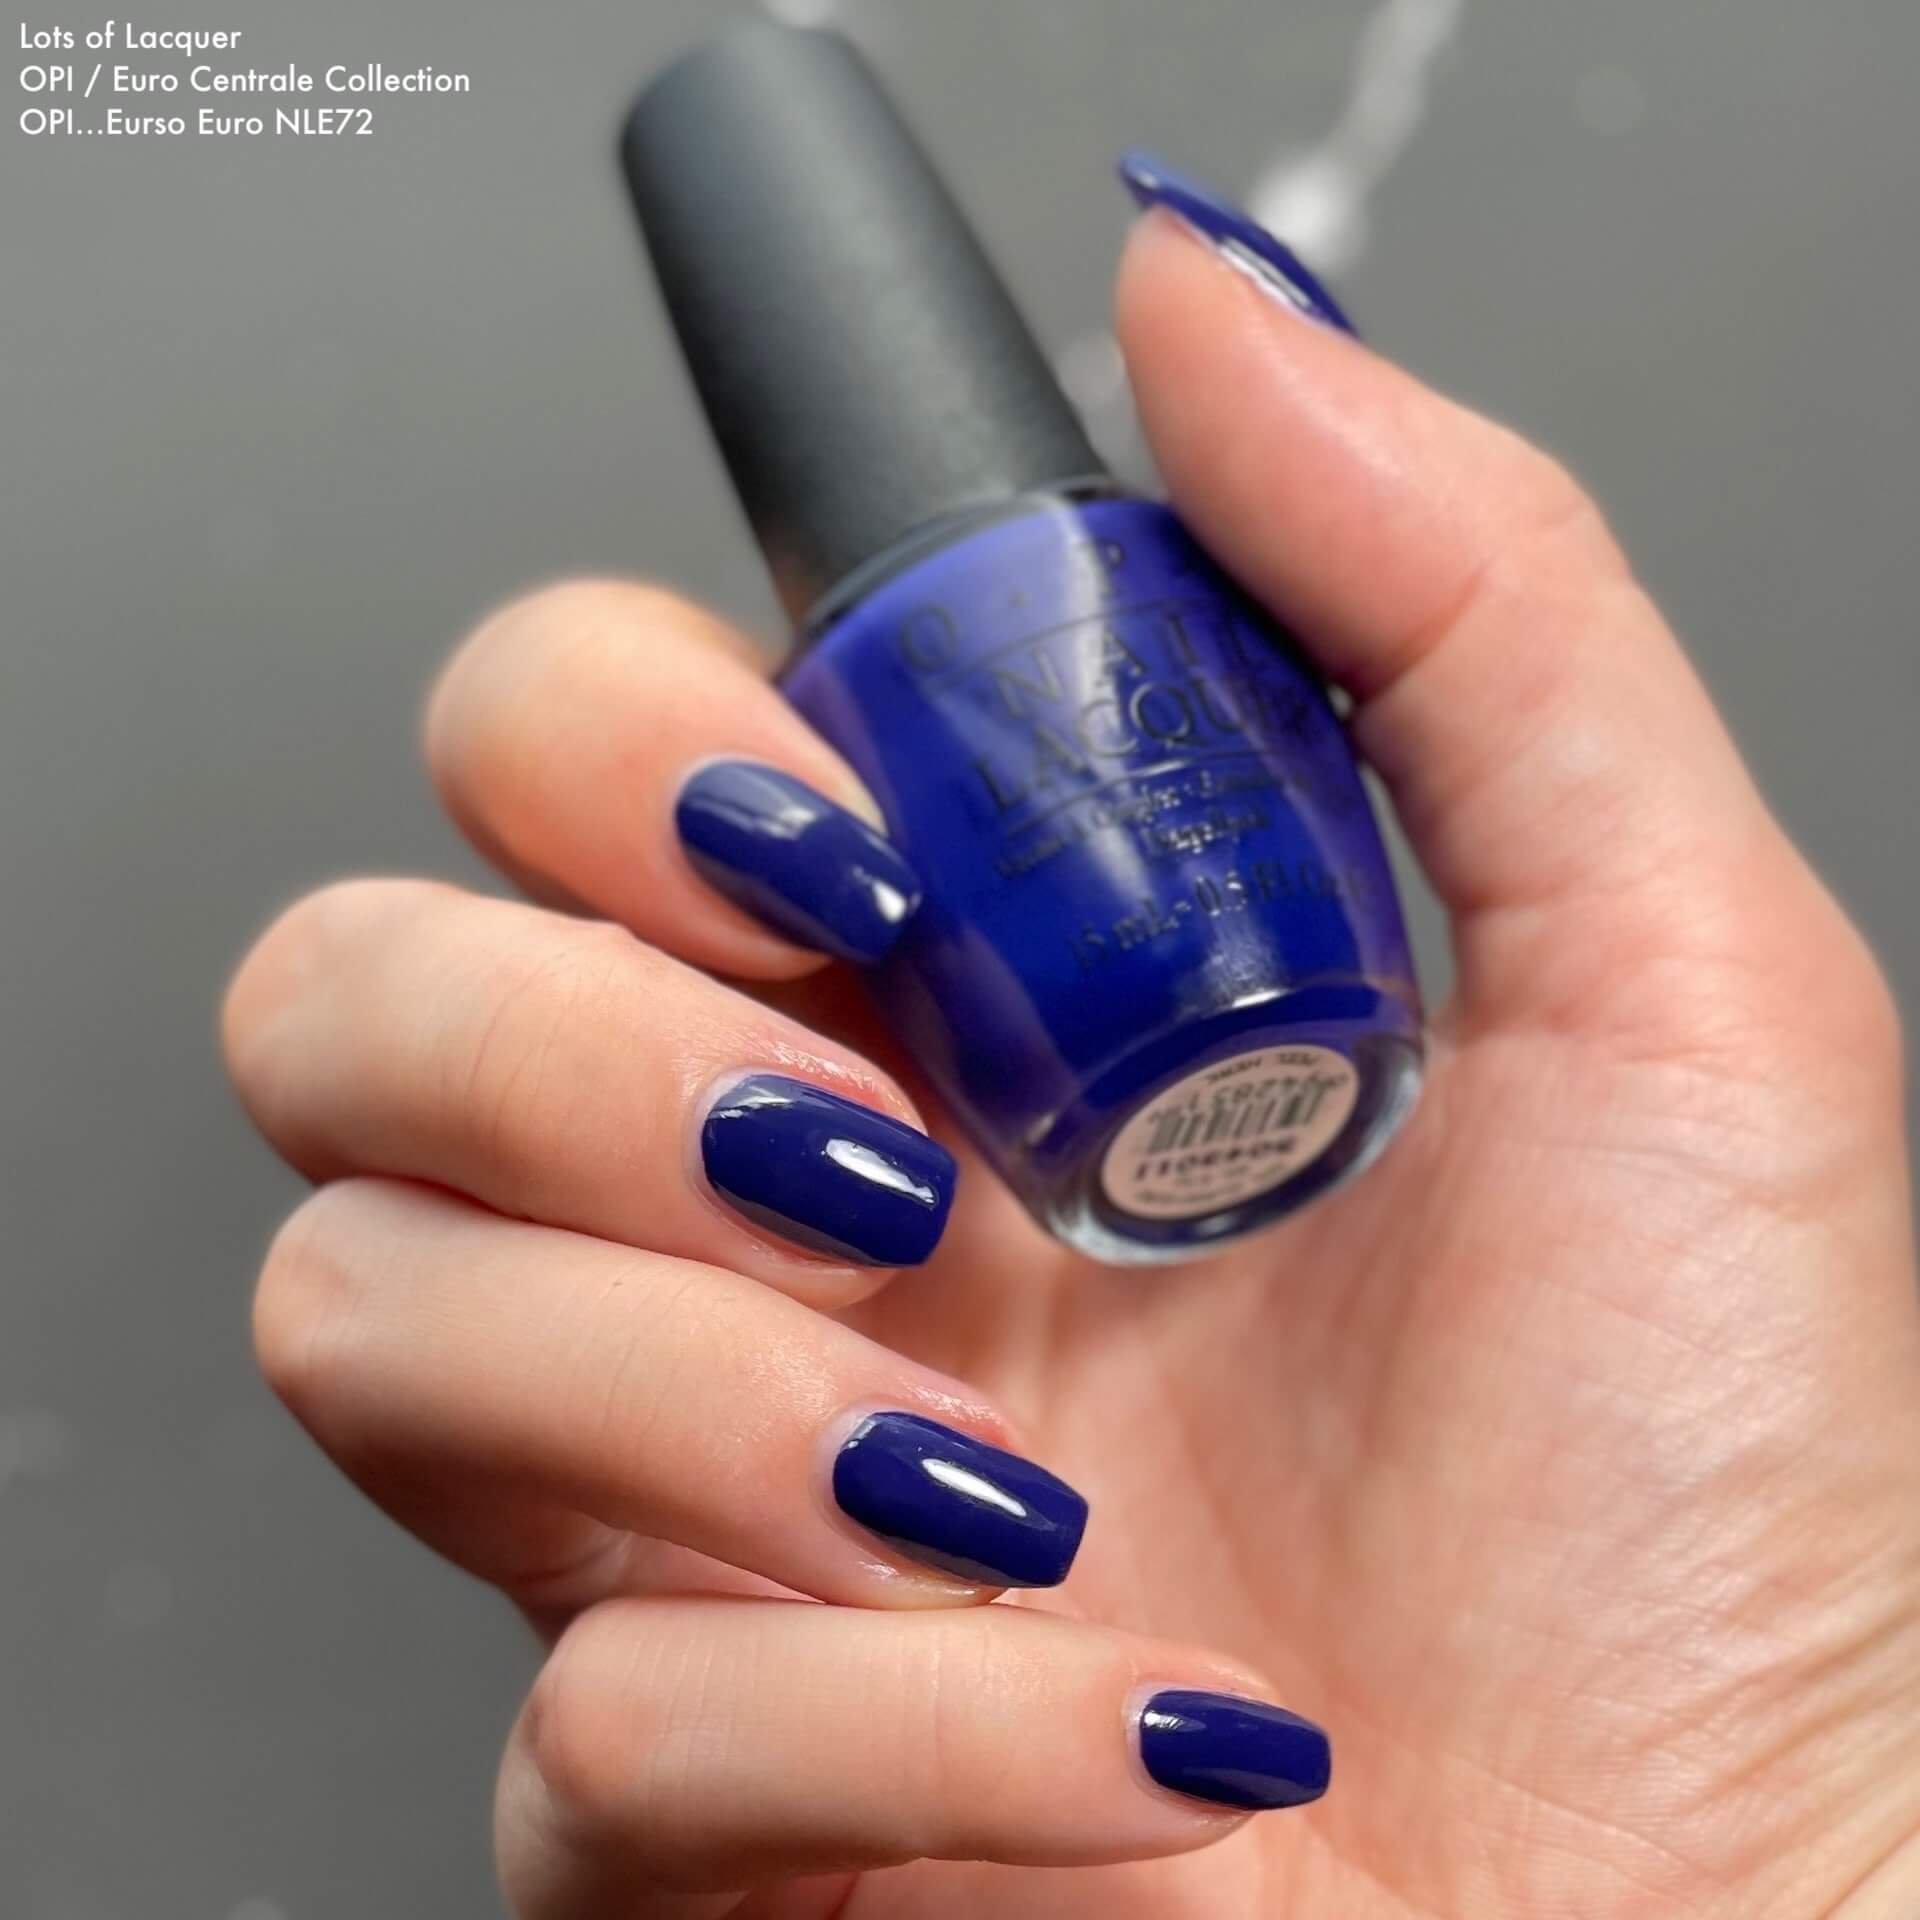 Stylish Trendy Female Manicure. Neon Blue Nails on Blue and White  Background. Nail Polish. Art Manicure. Modern Style Stock Image - Image of  hands, blue: 167467181